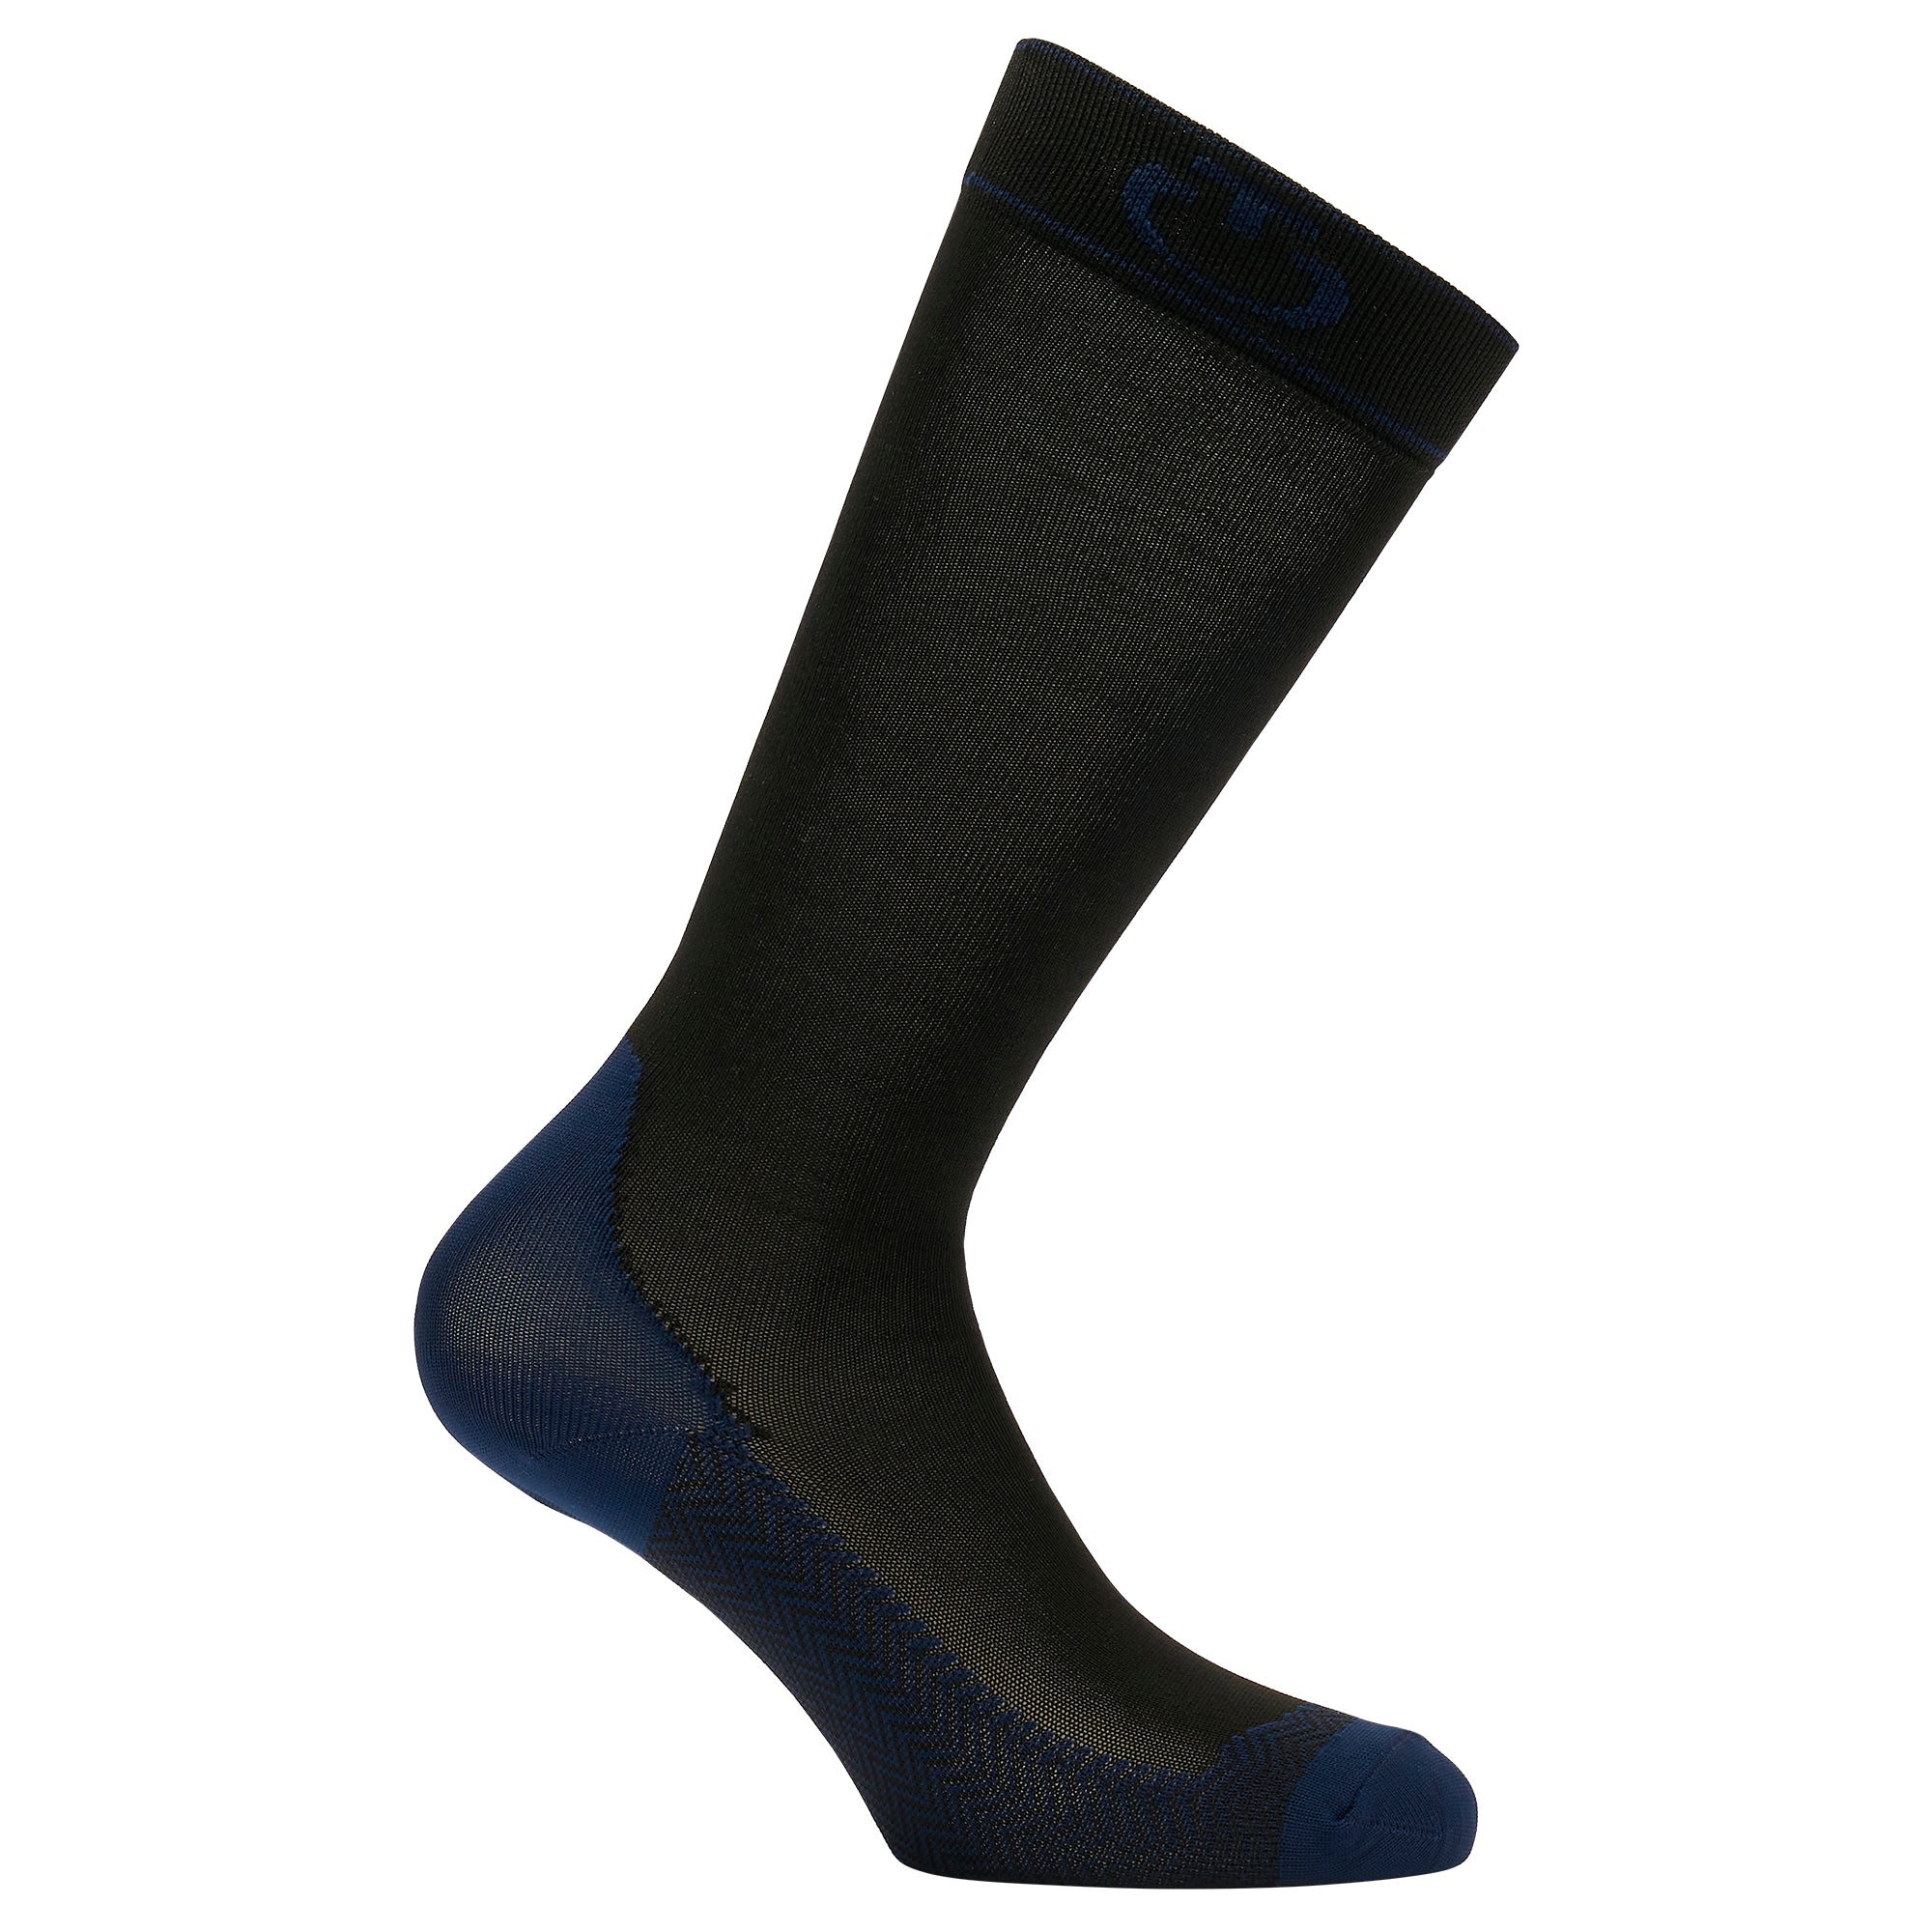 CT riding socks black with blue logo